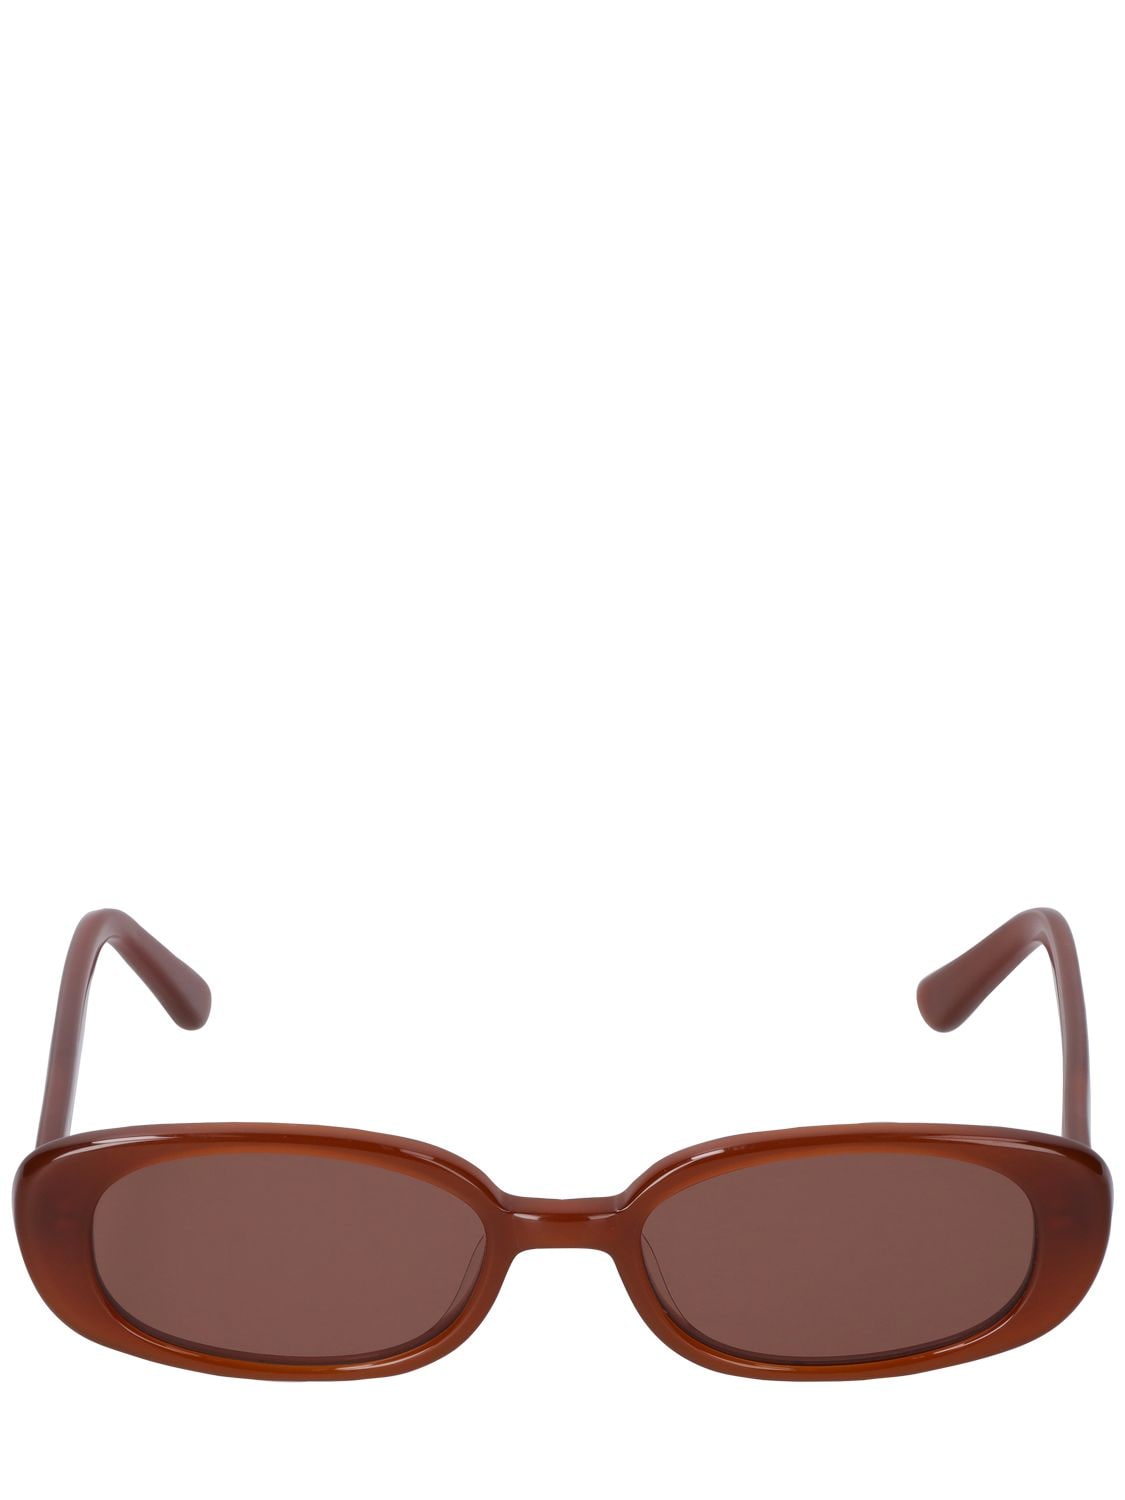 Image of Velvetines Oval Acetate Sunglasses